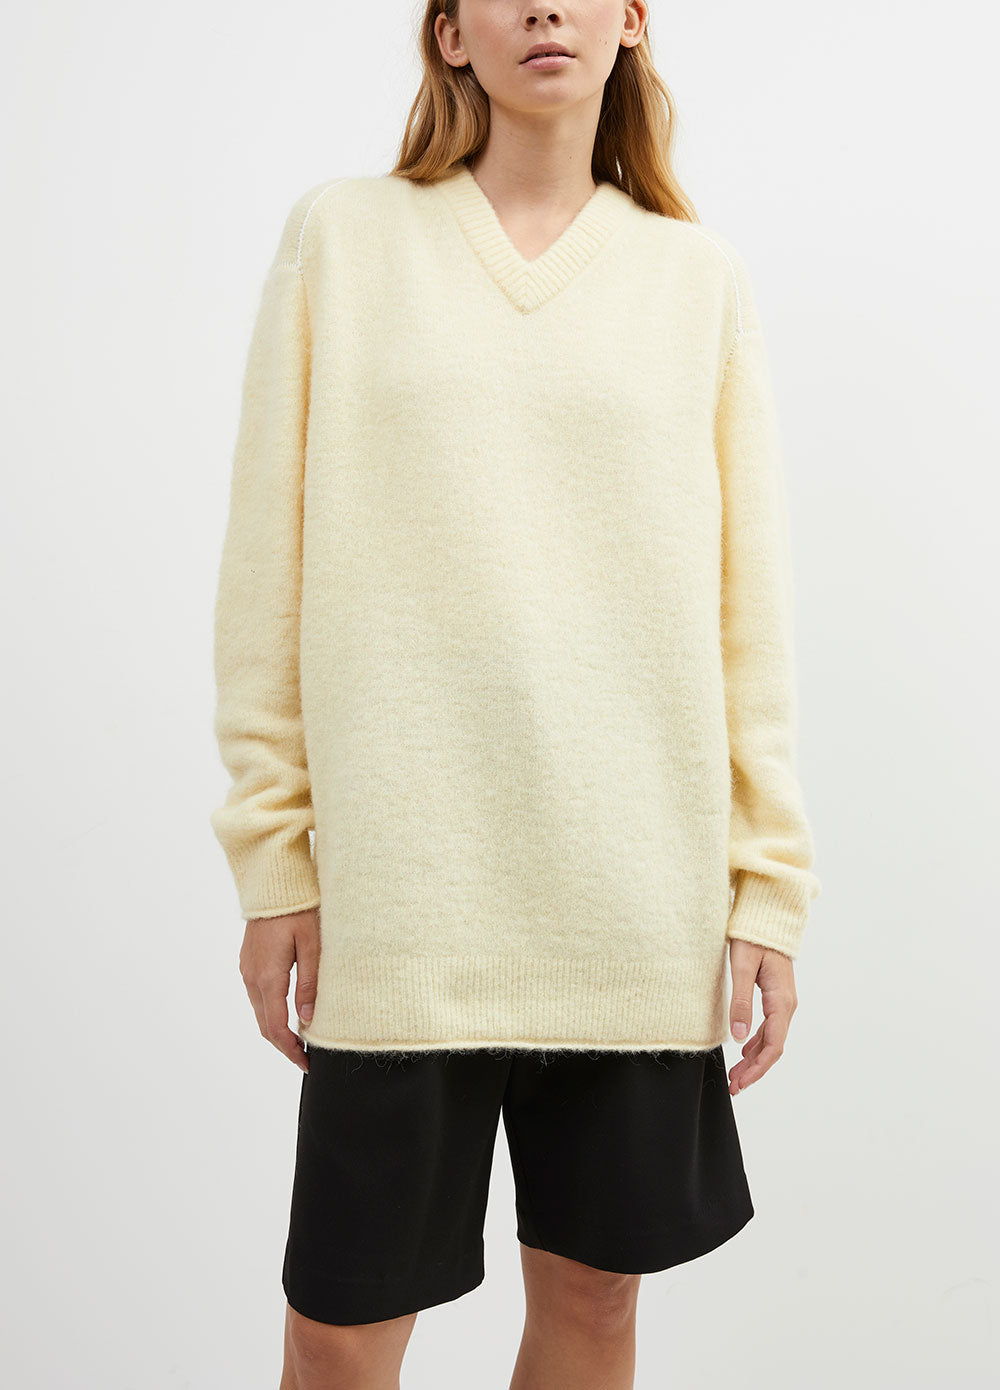 Karlita Oversized Sweater